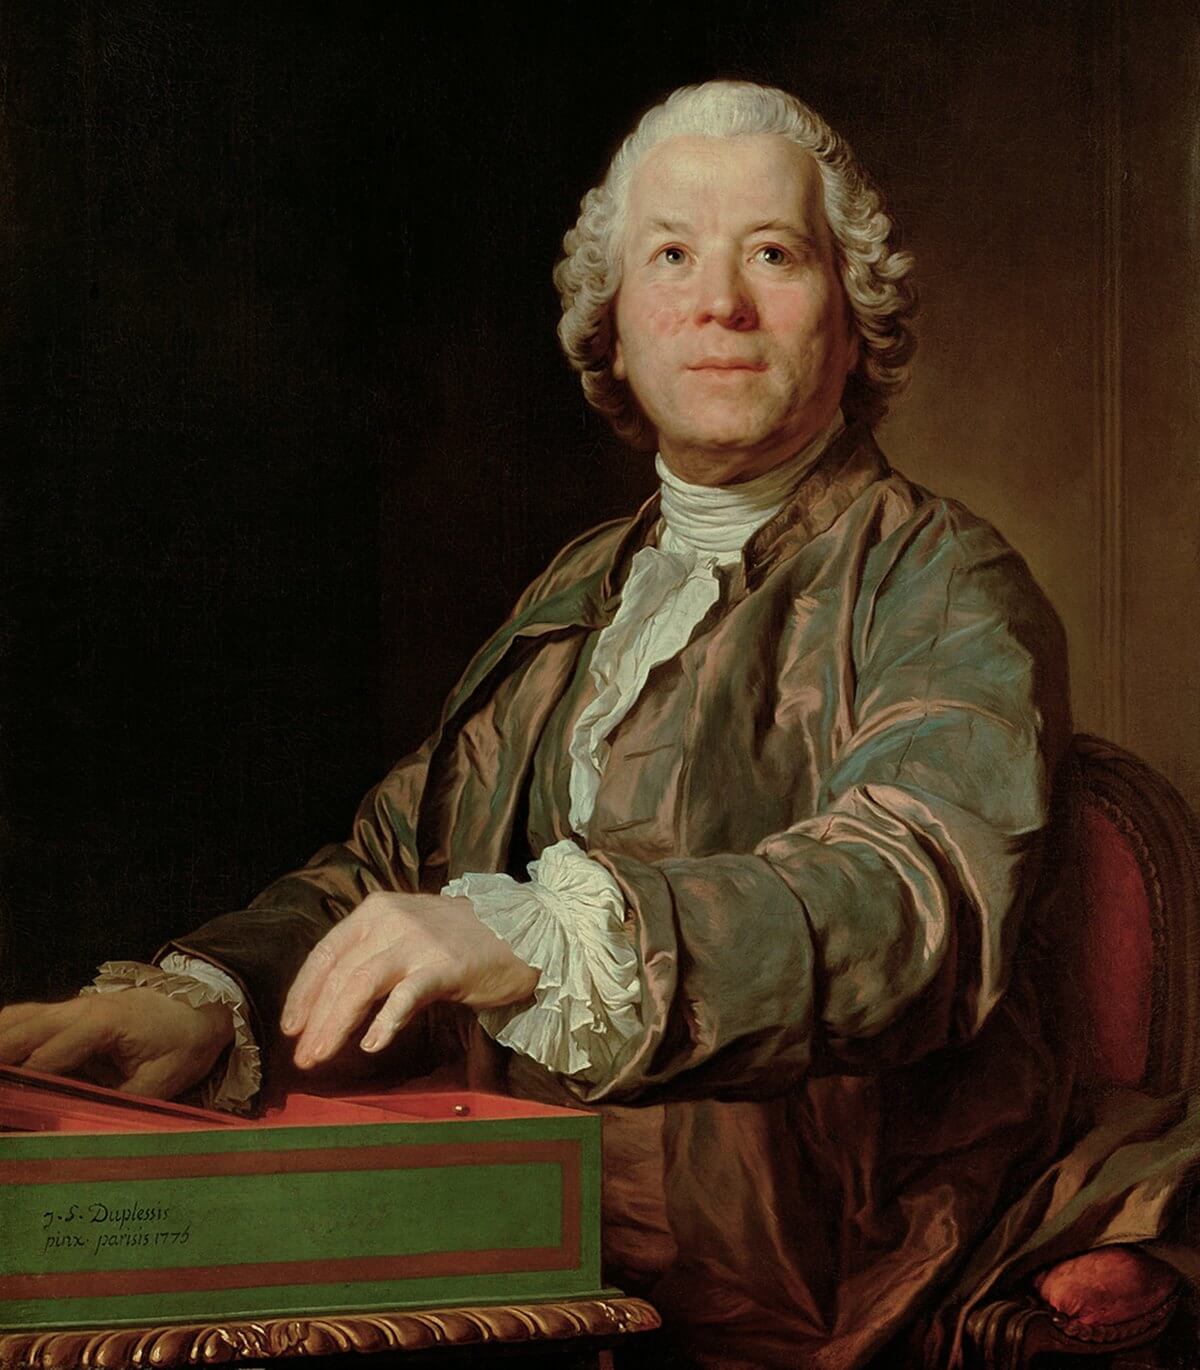 Portrait of Christoph Willibald Gluck, 1775, by Joseph-Sifrède Duplessis/Kunsthistorisches Museum Wien (Public domain)